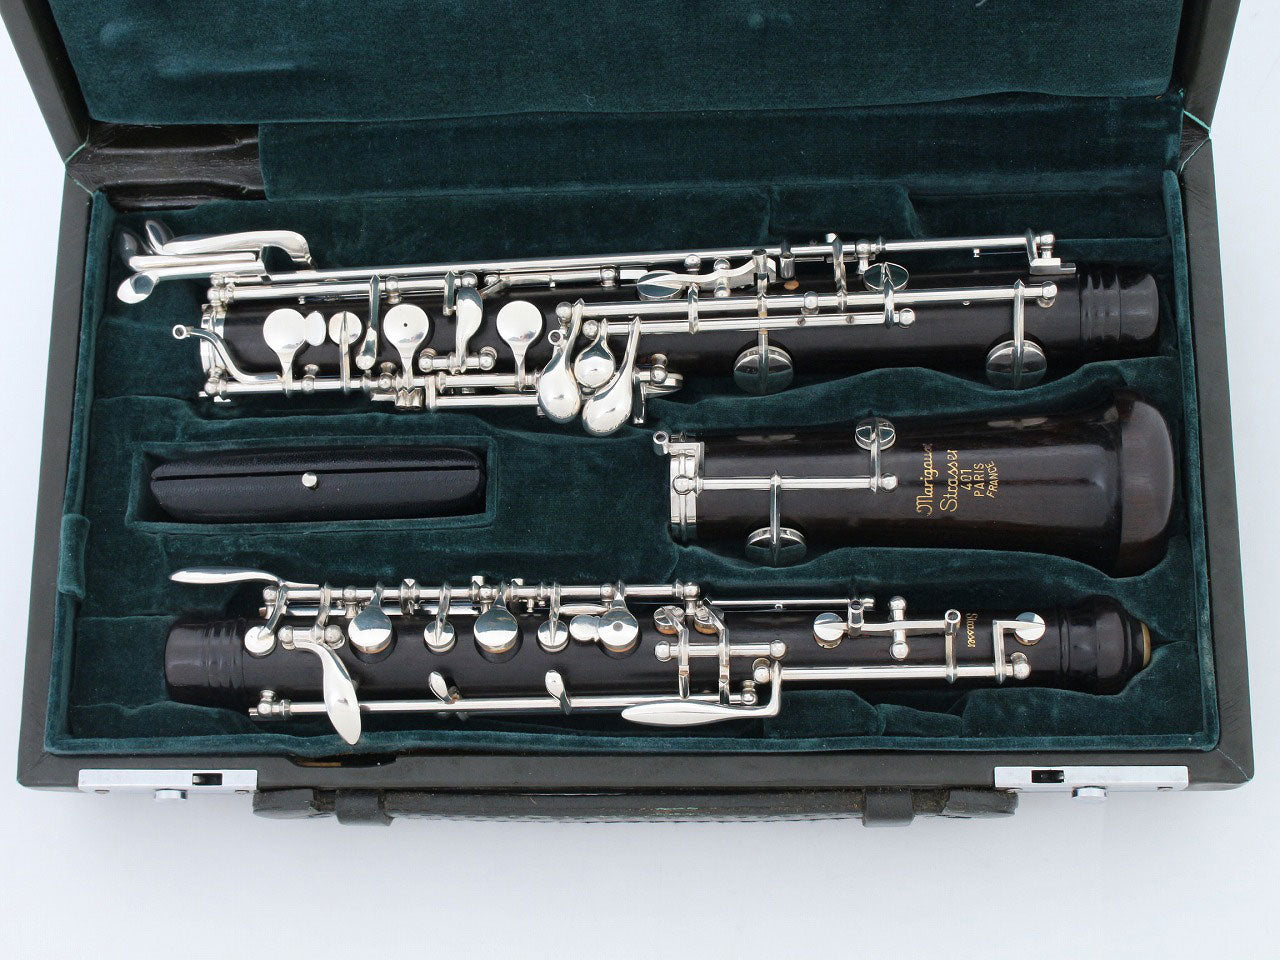 Oboe/bassoon [Wind Instruments › Oboe/bassoon]